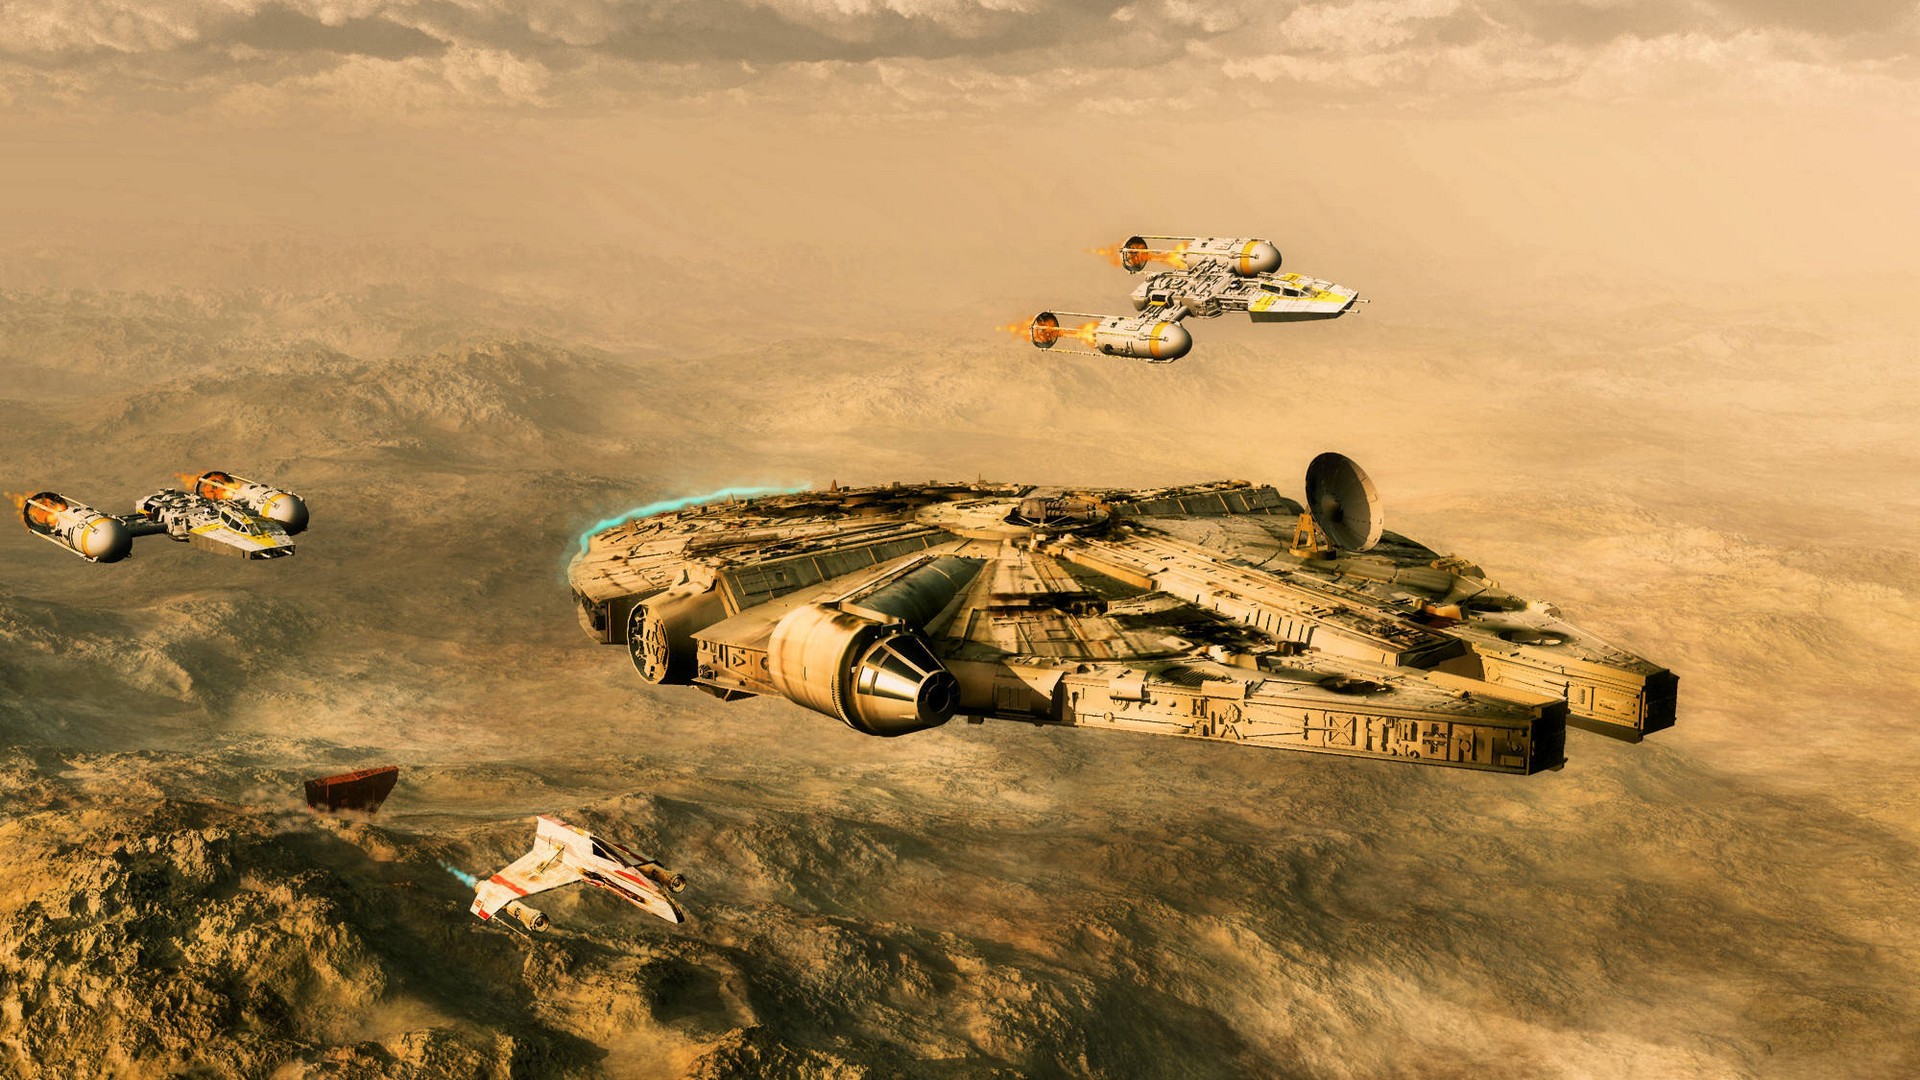 General 1920x1080 digital art science fiction Star Wars Millennium Falcon Y-Wing artwork spaceship Star Wars Ships CGI vehicle